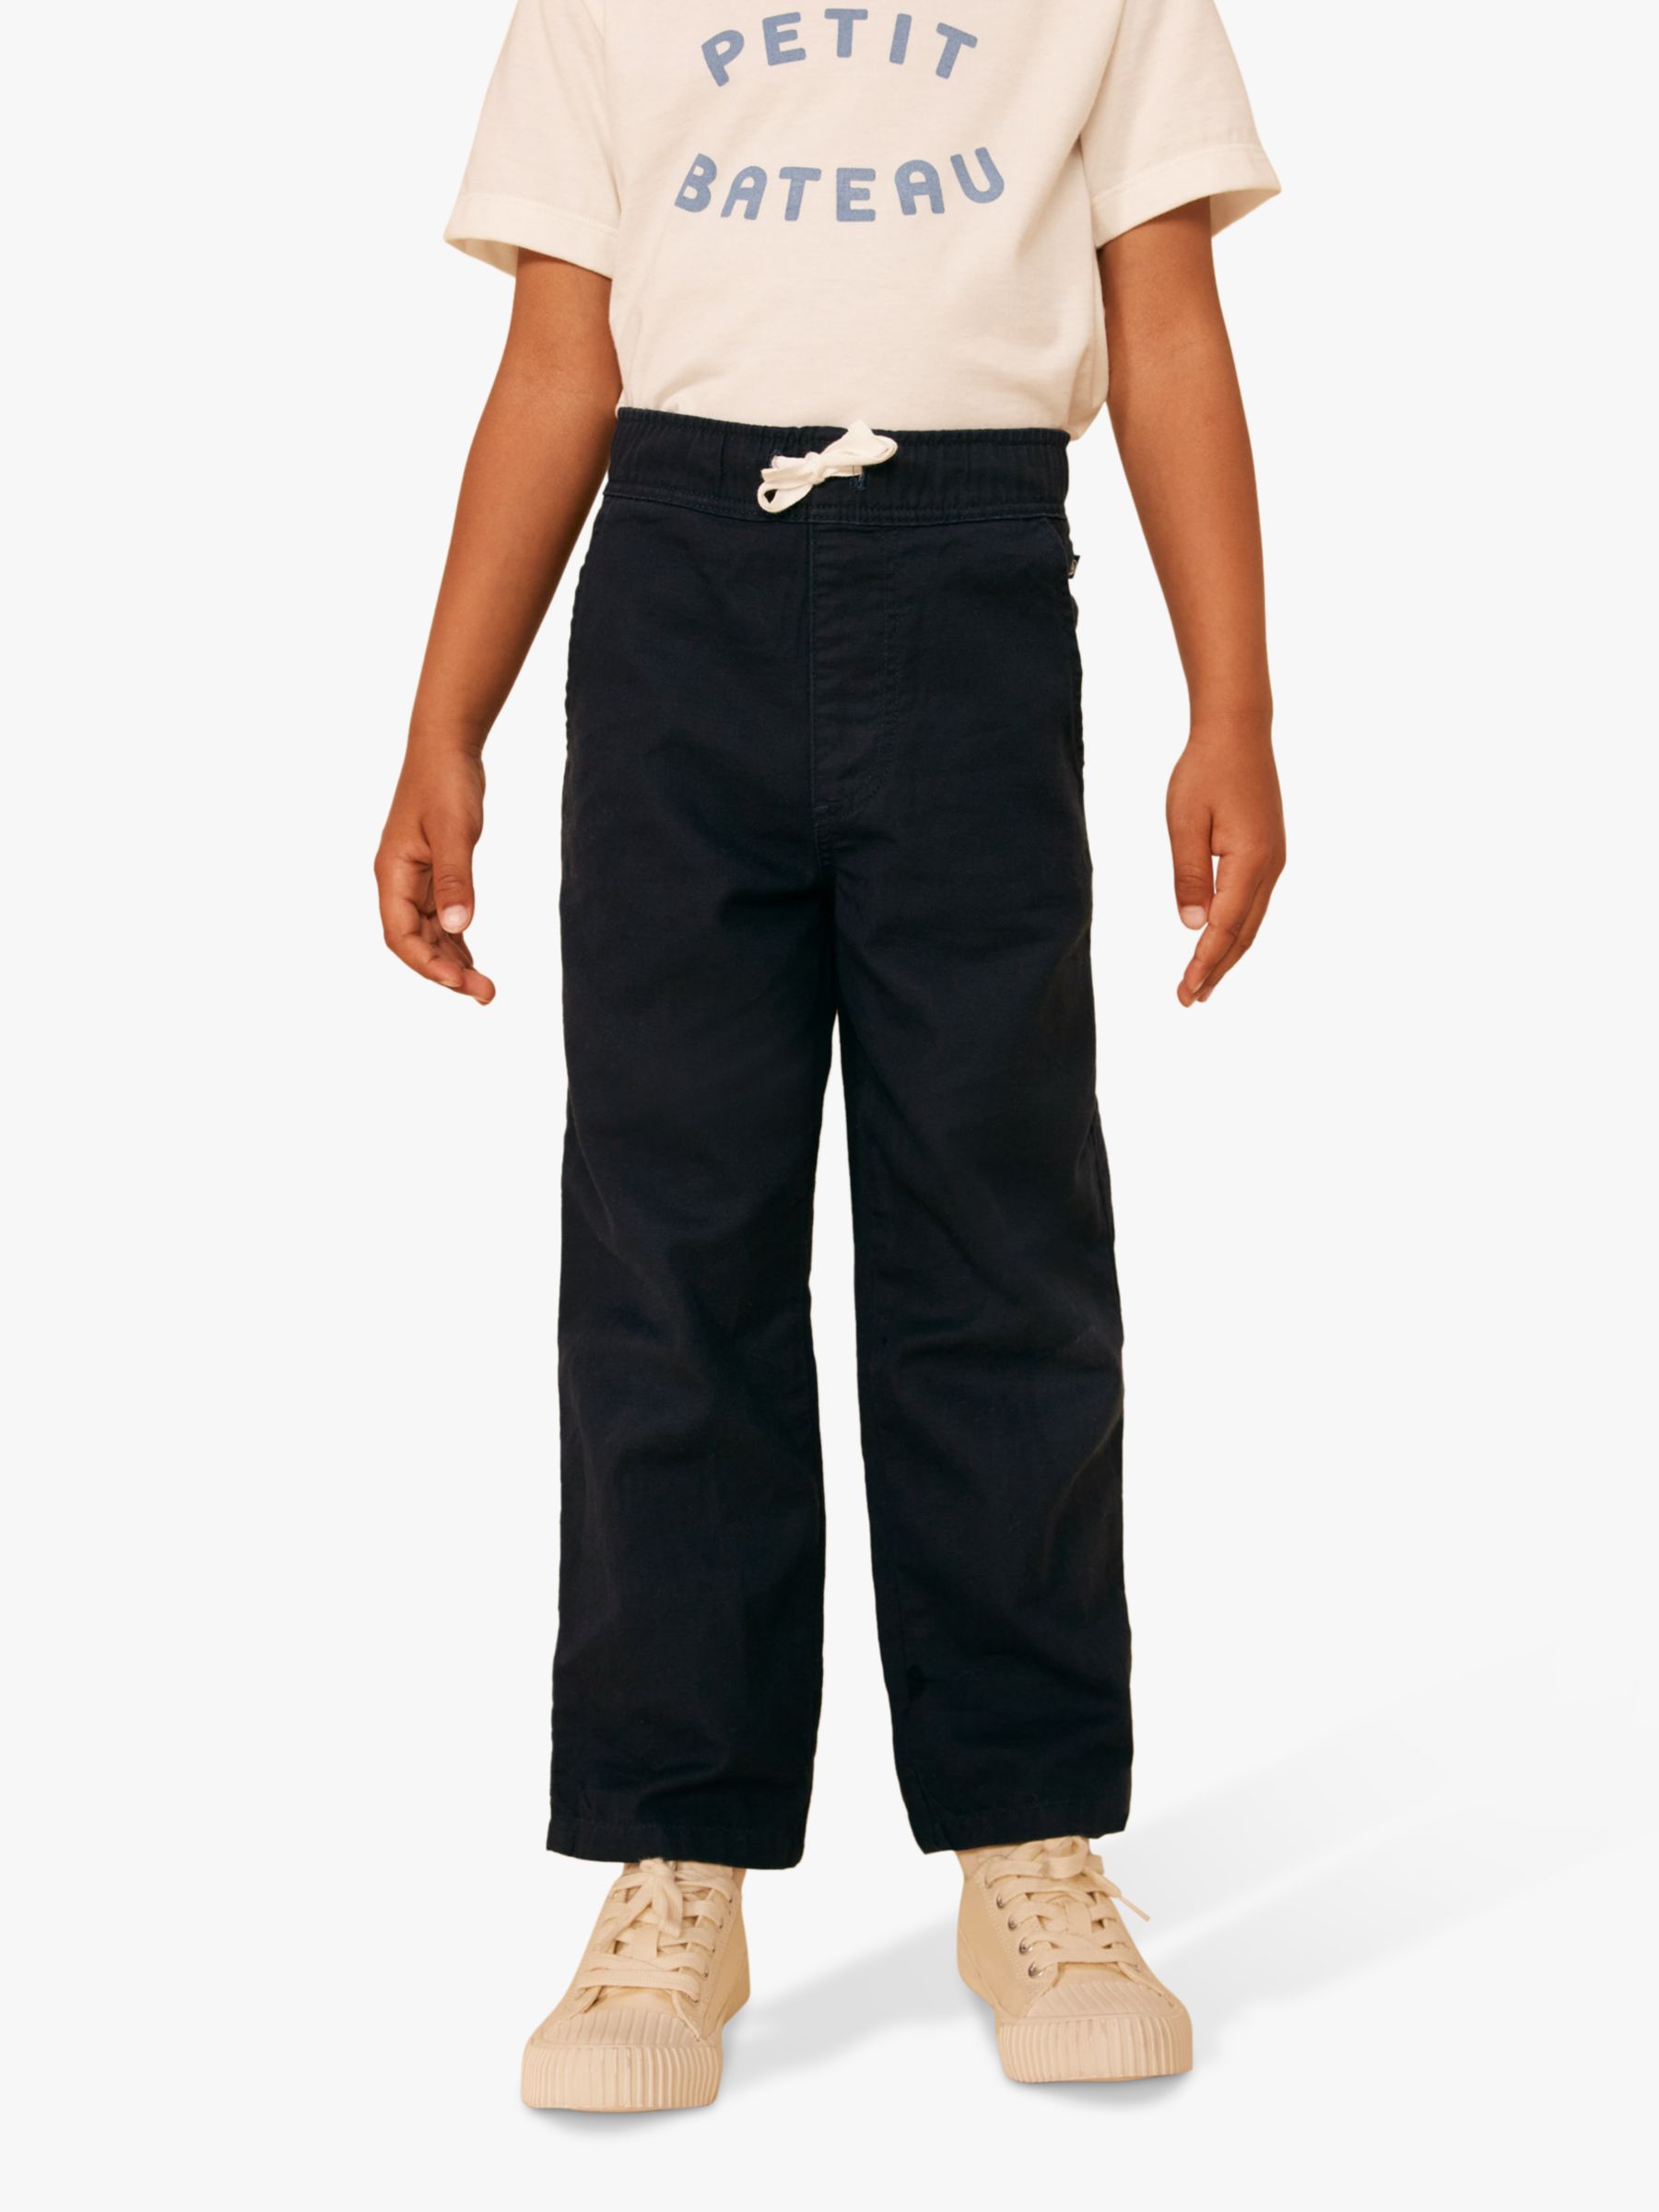 Petit Bateau Kids' Cotton Linen Blend Trousers, Smoke, 3 years